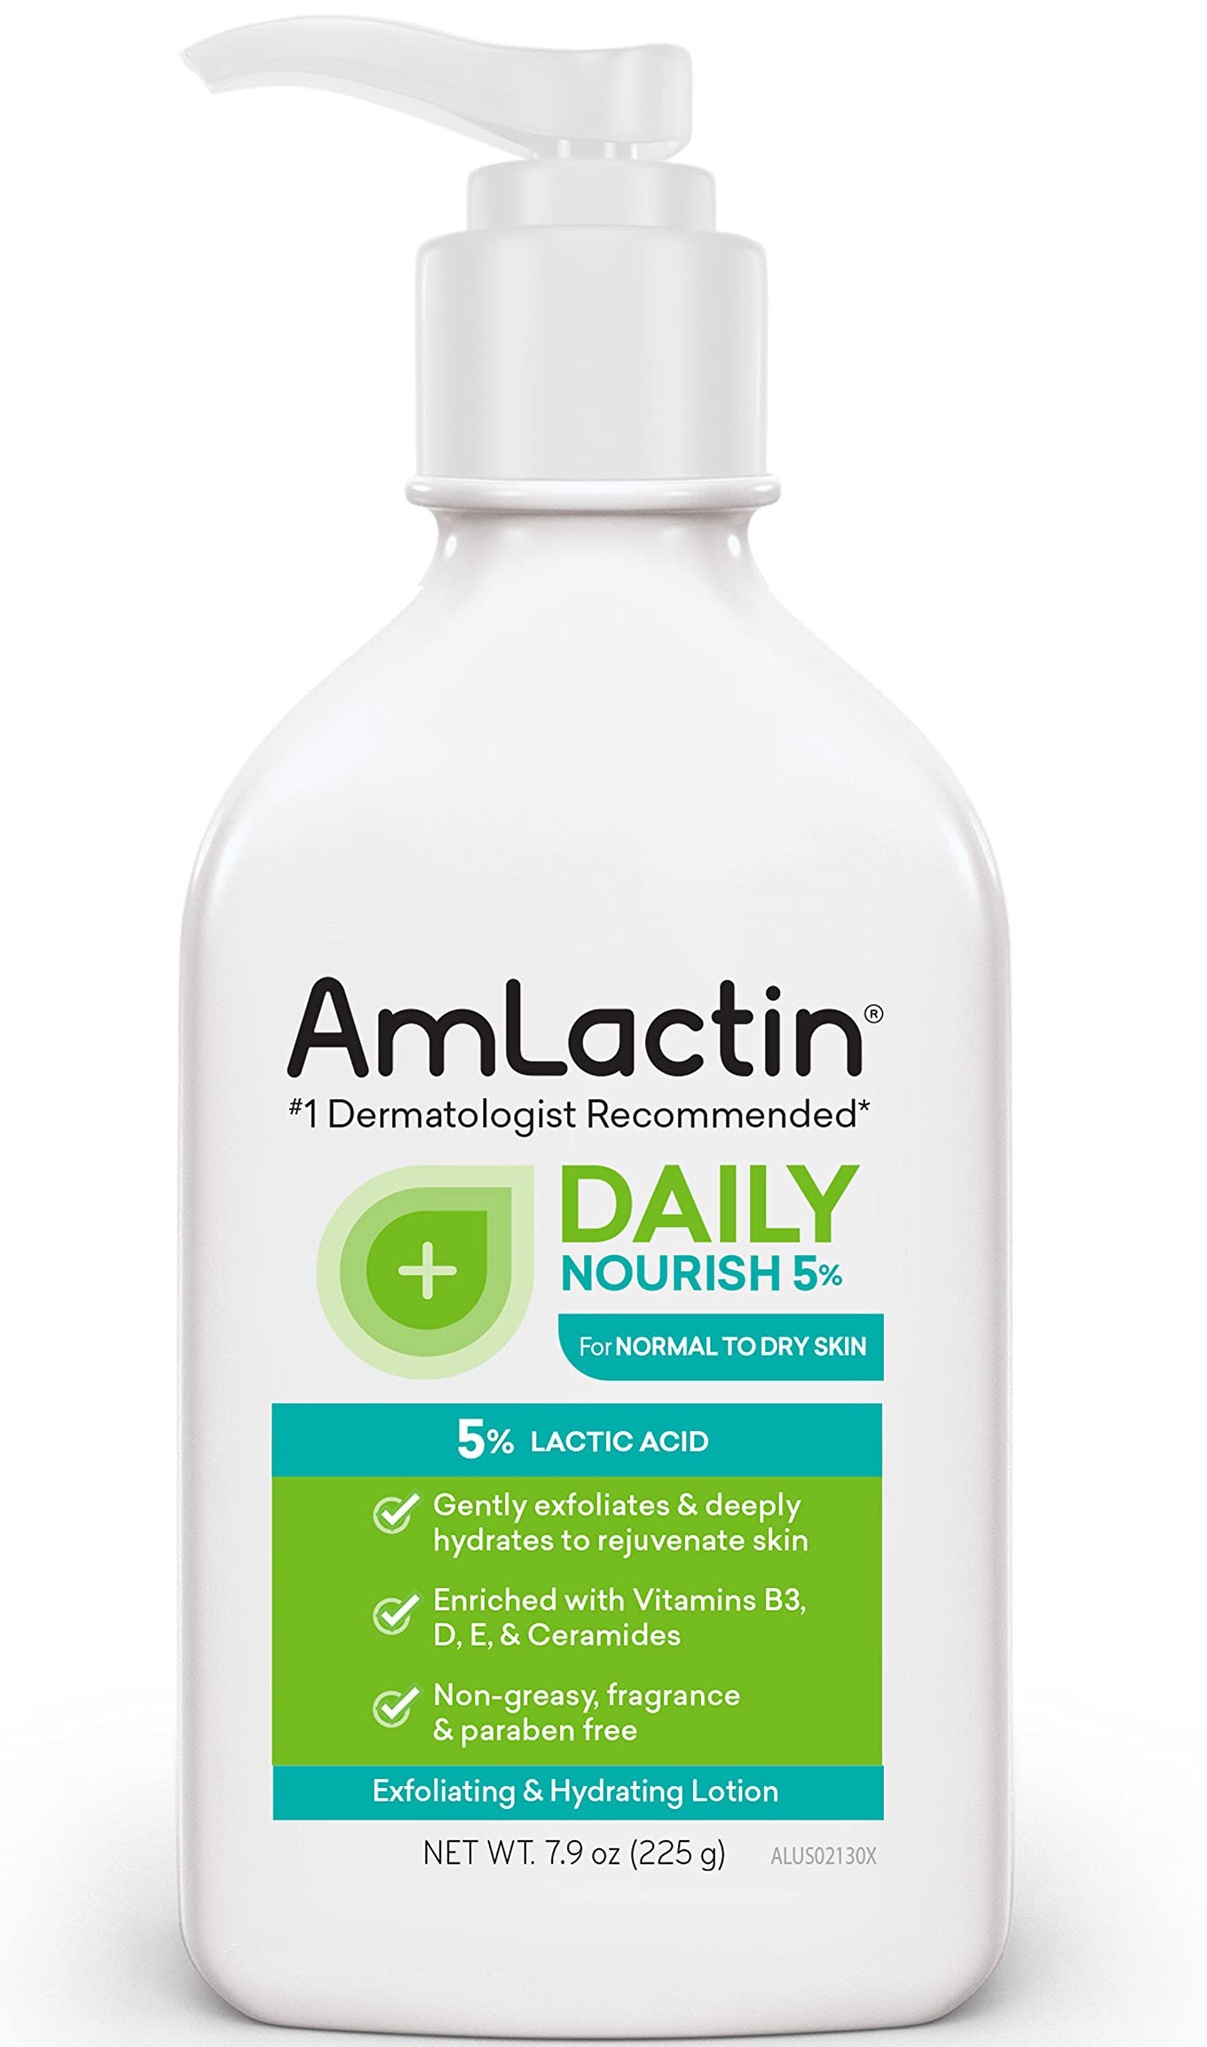 Amlactin Daily Nourish 5% Lotion